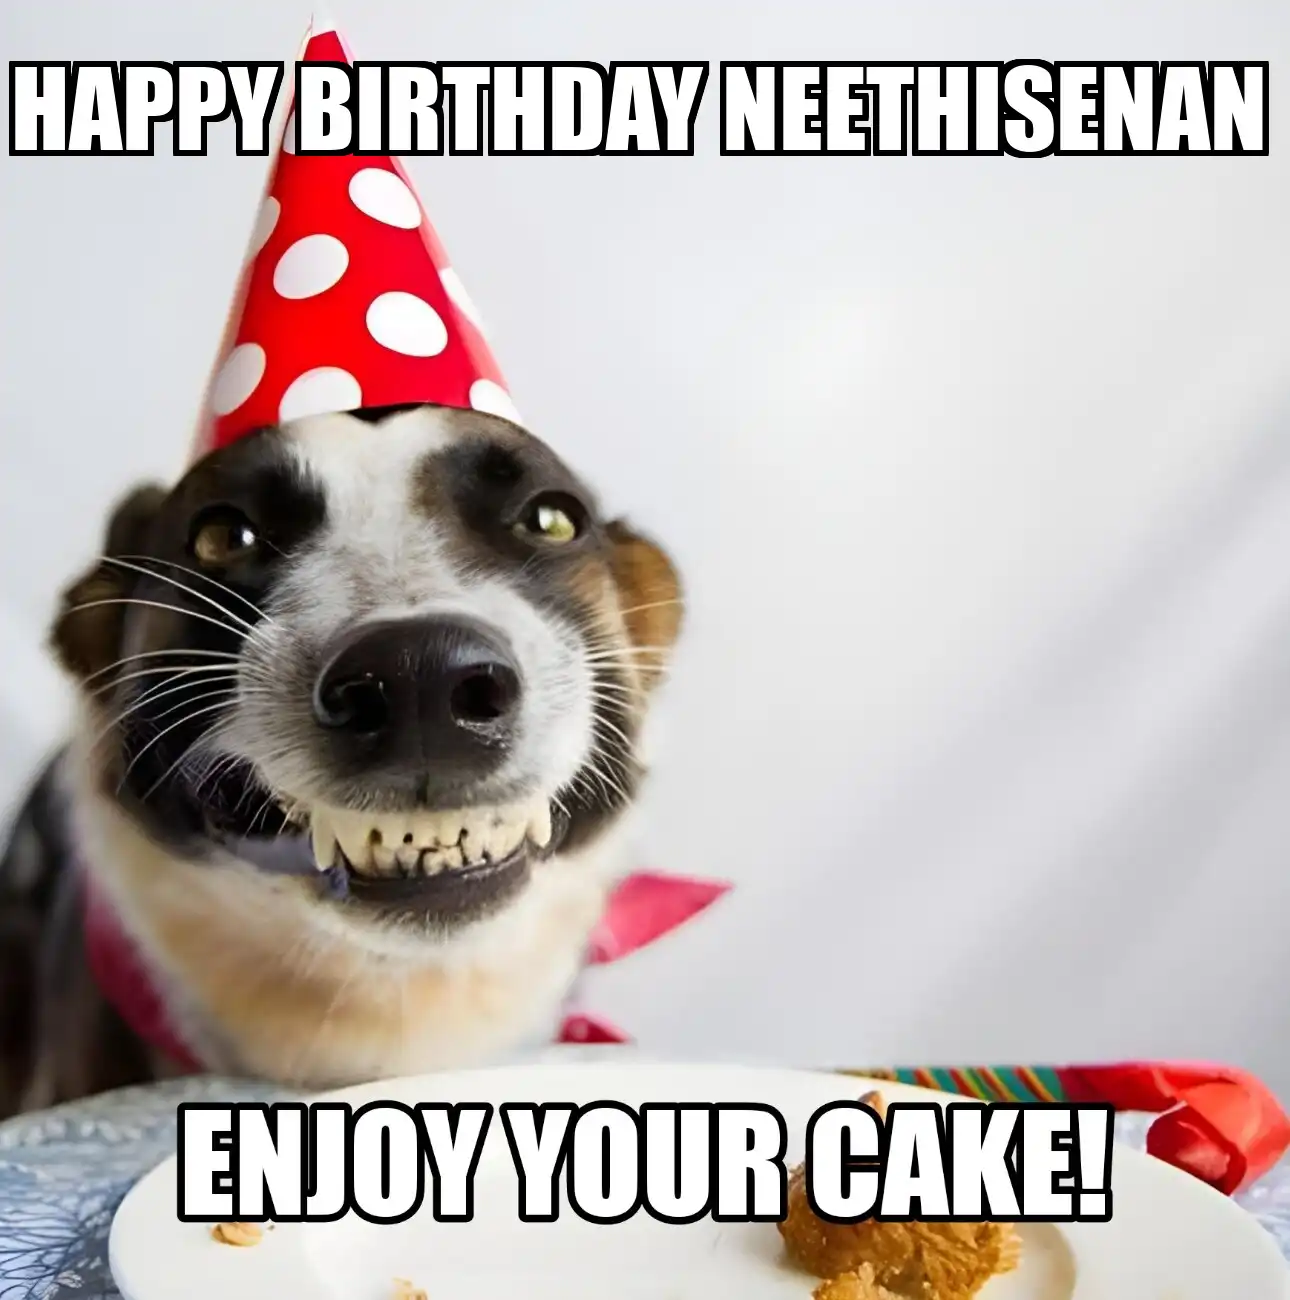 Happy Birthday Neethisenan Enjoy Your Cake Dog Meme